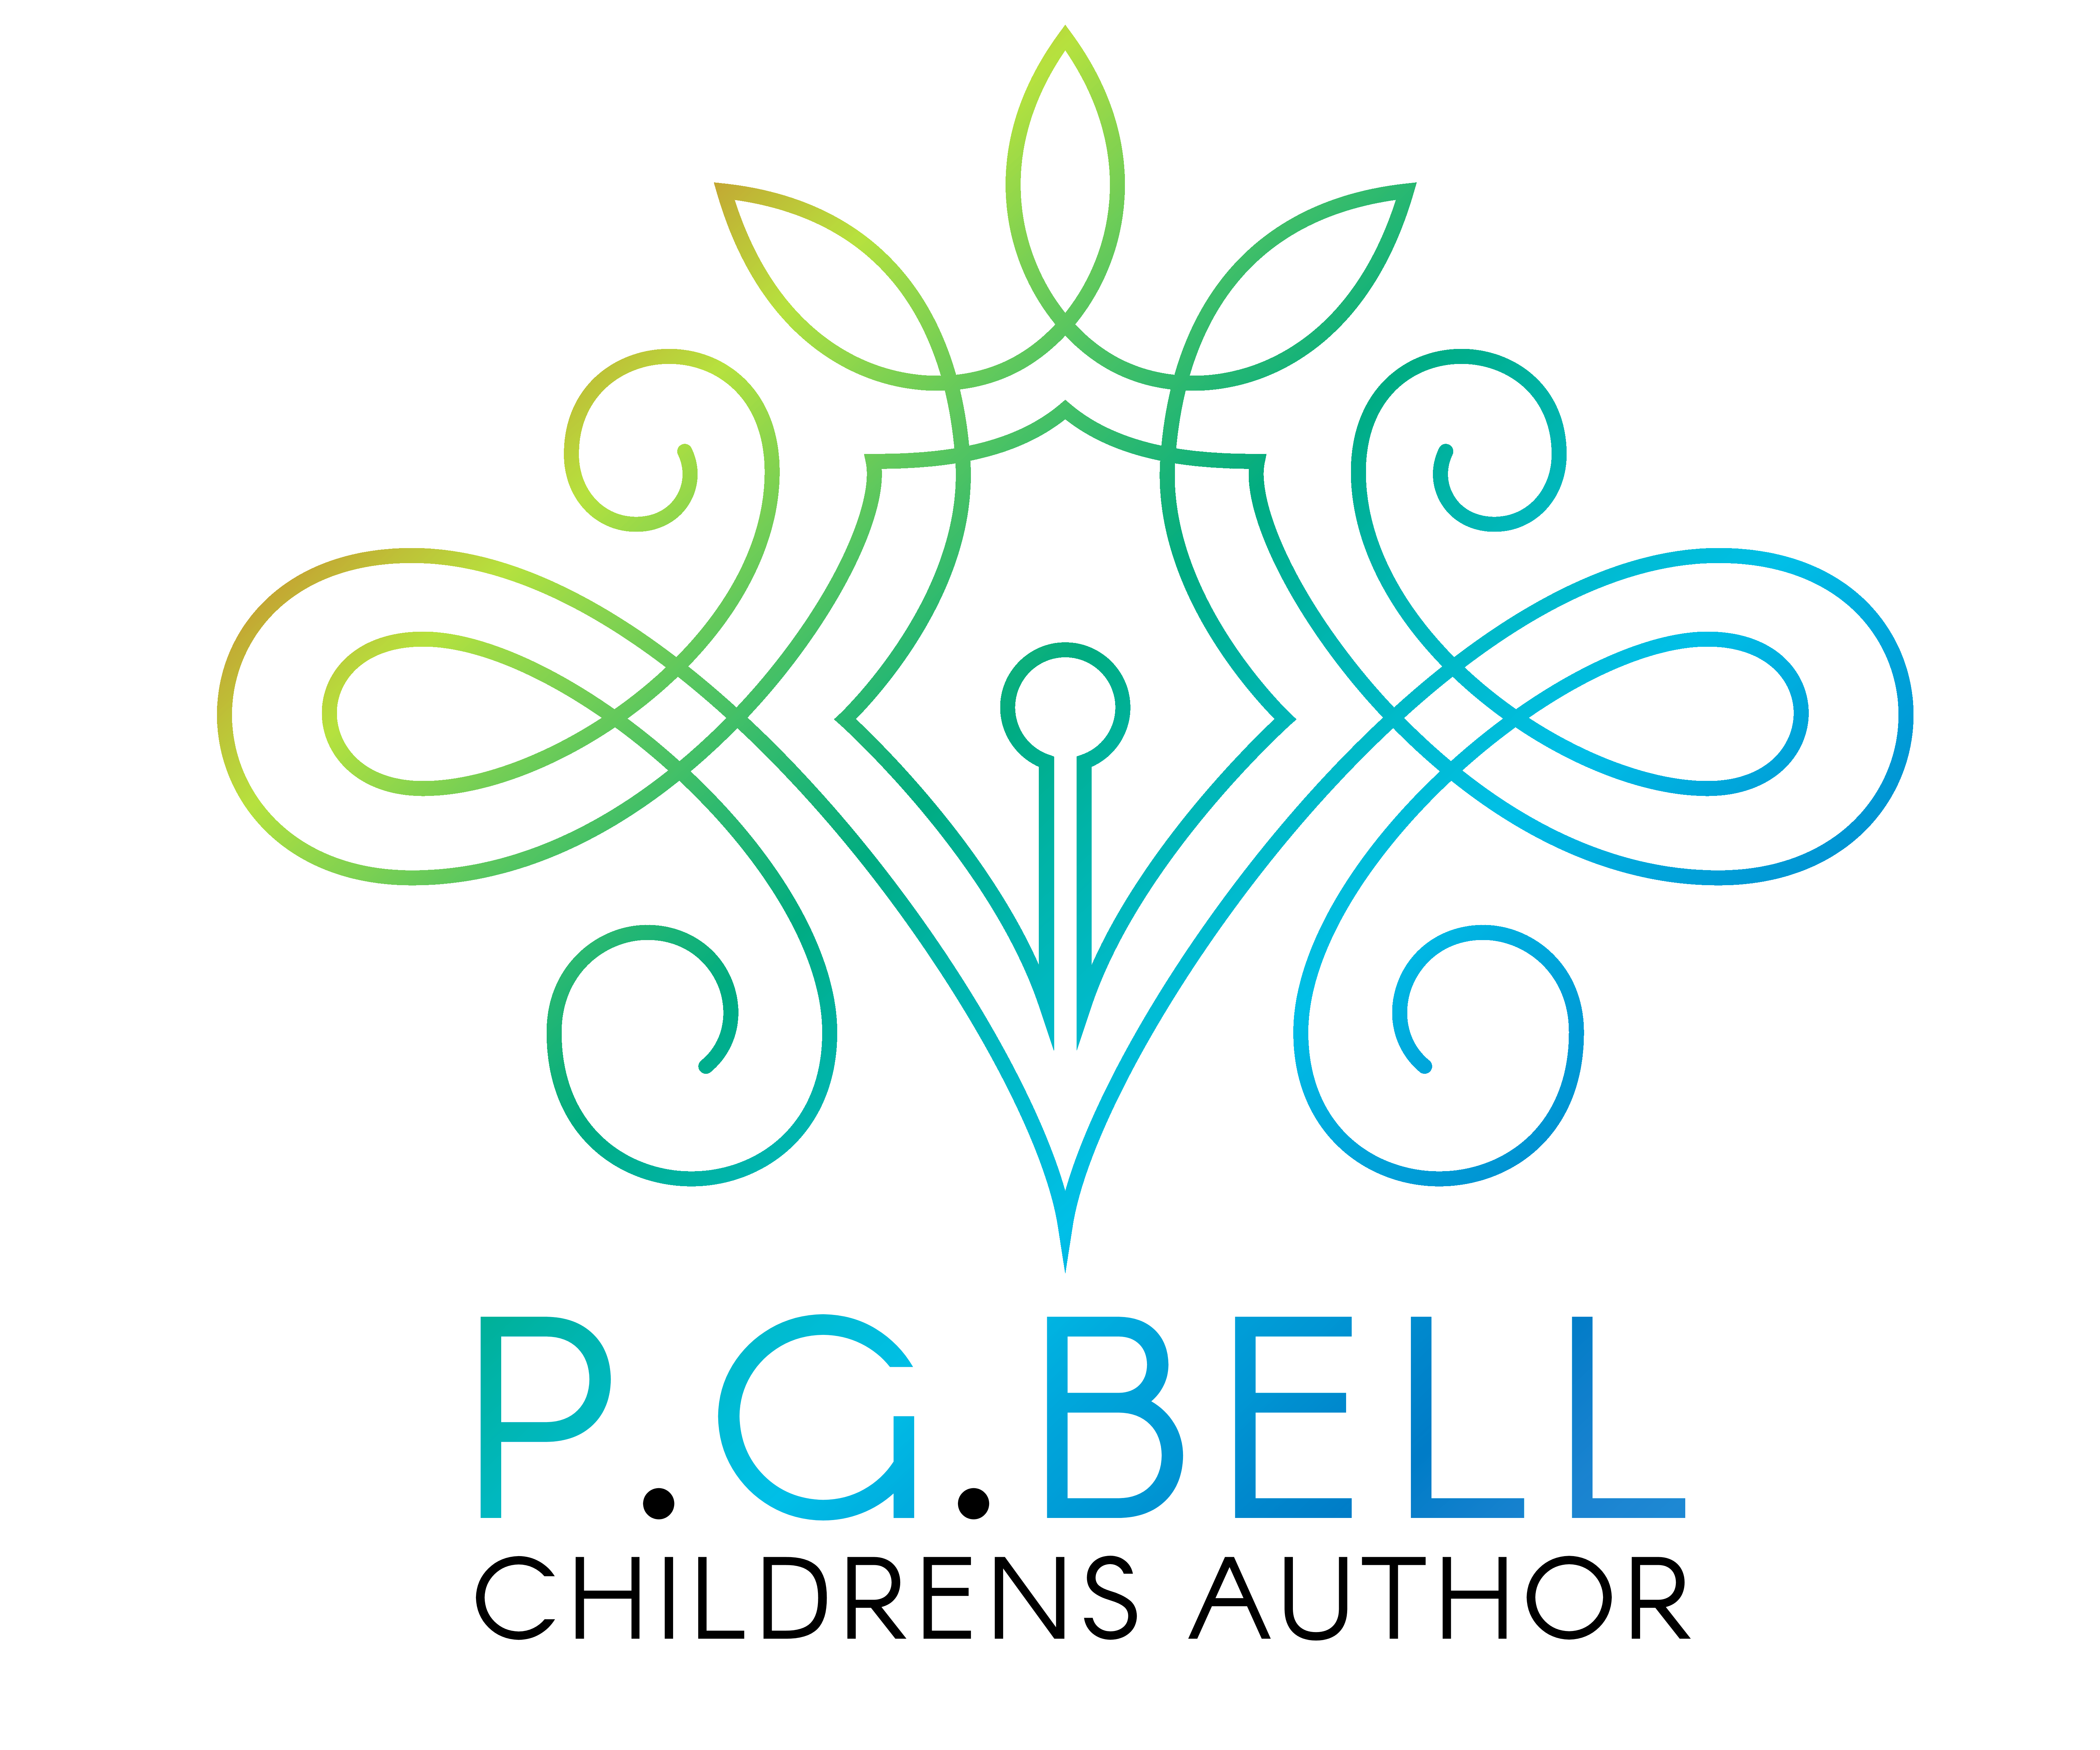 P. G. Bell Children's Author